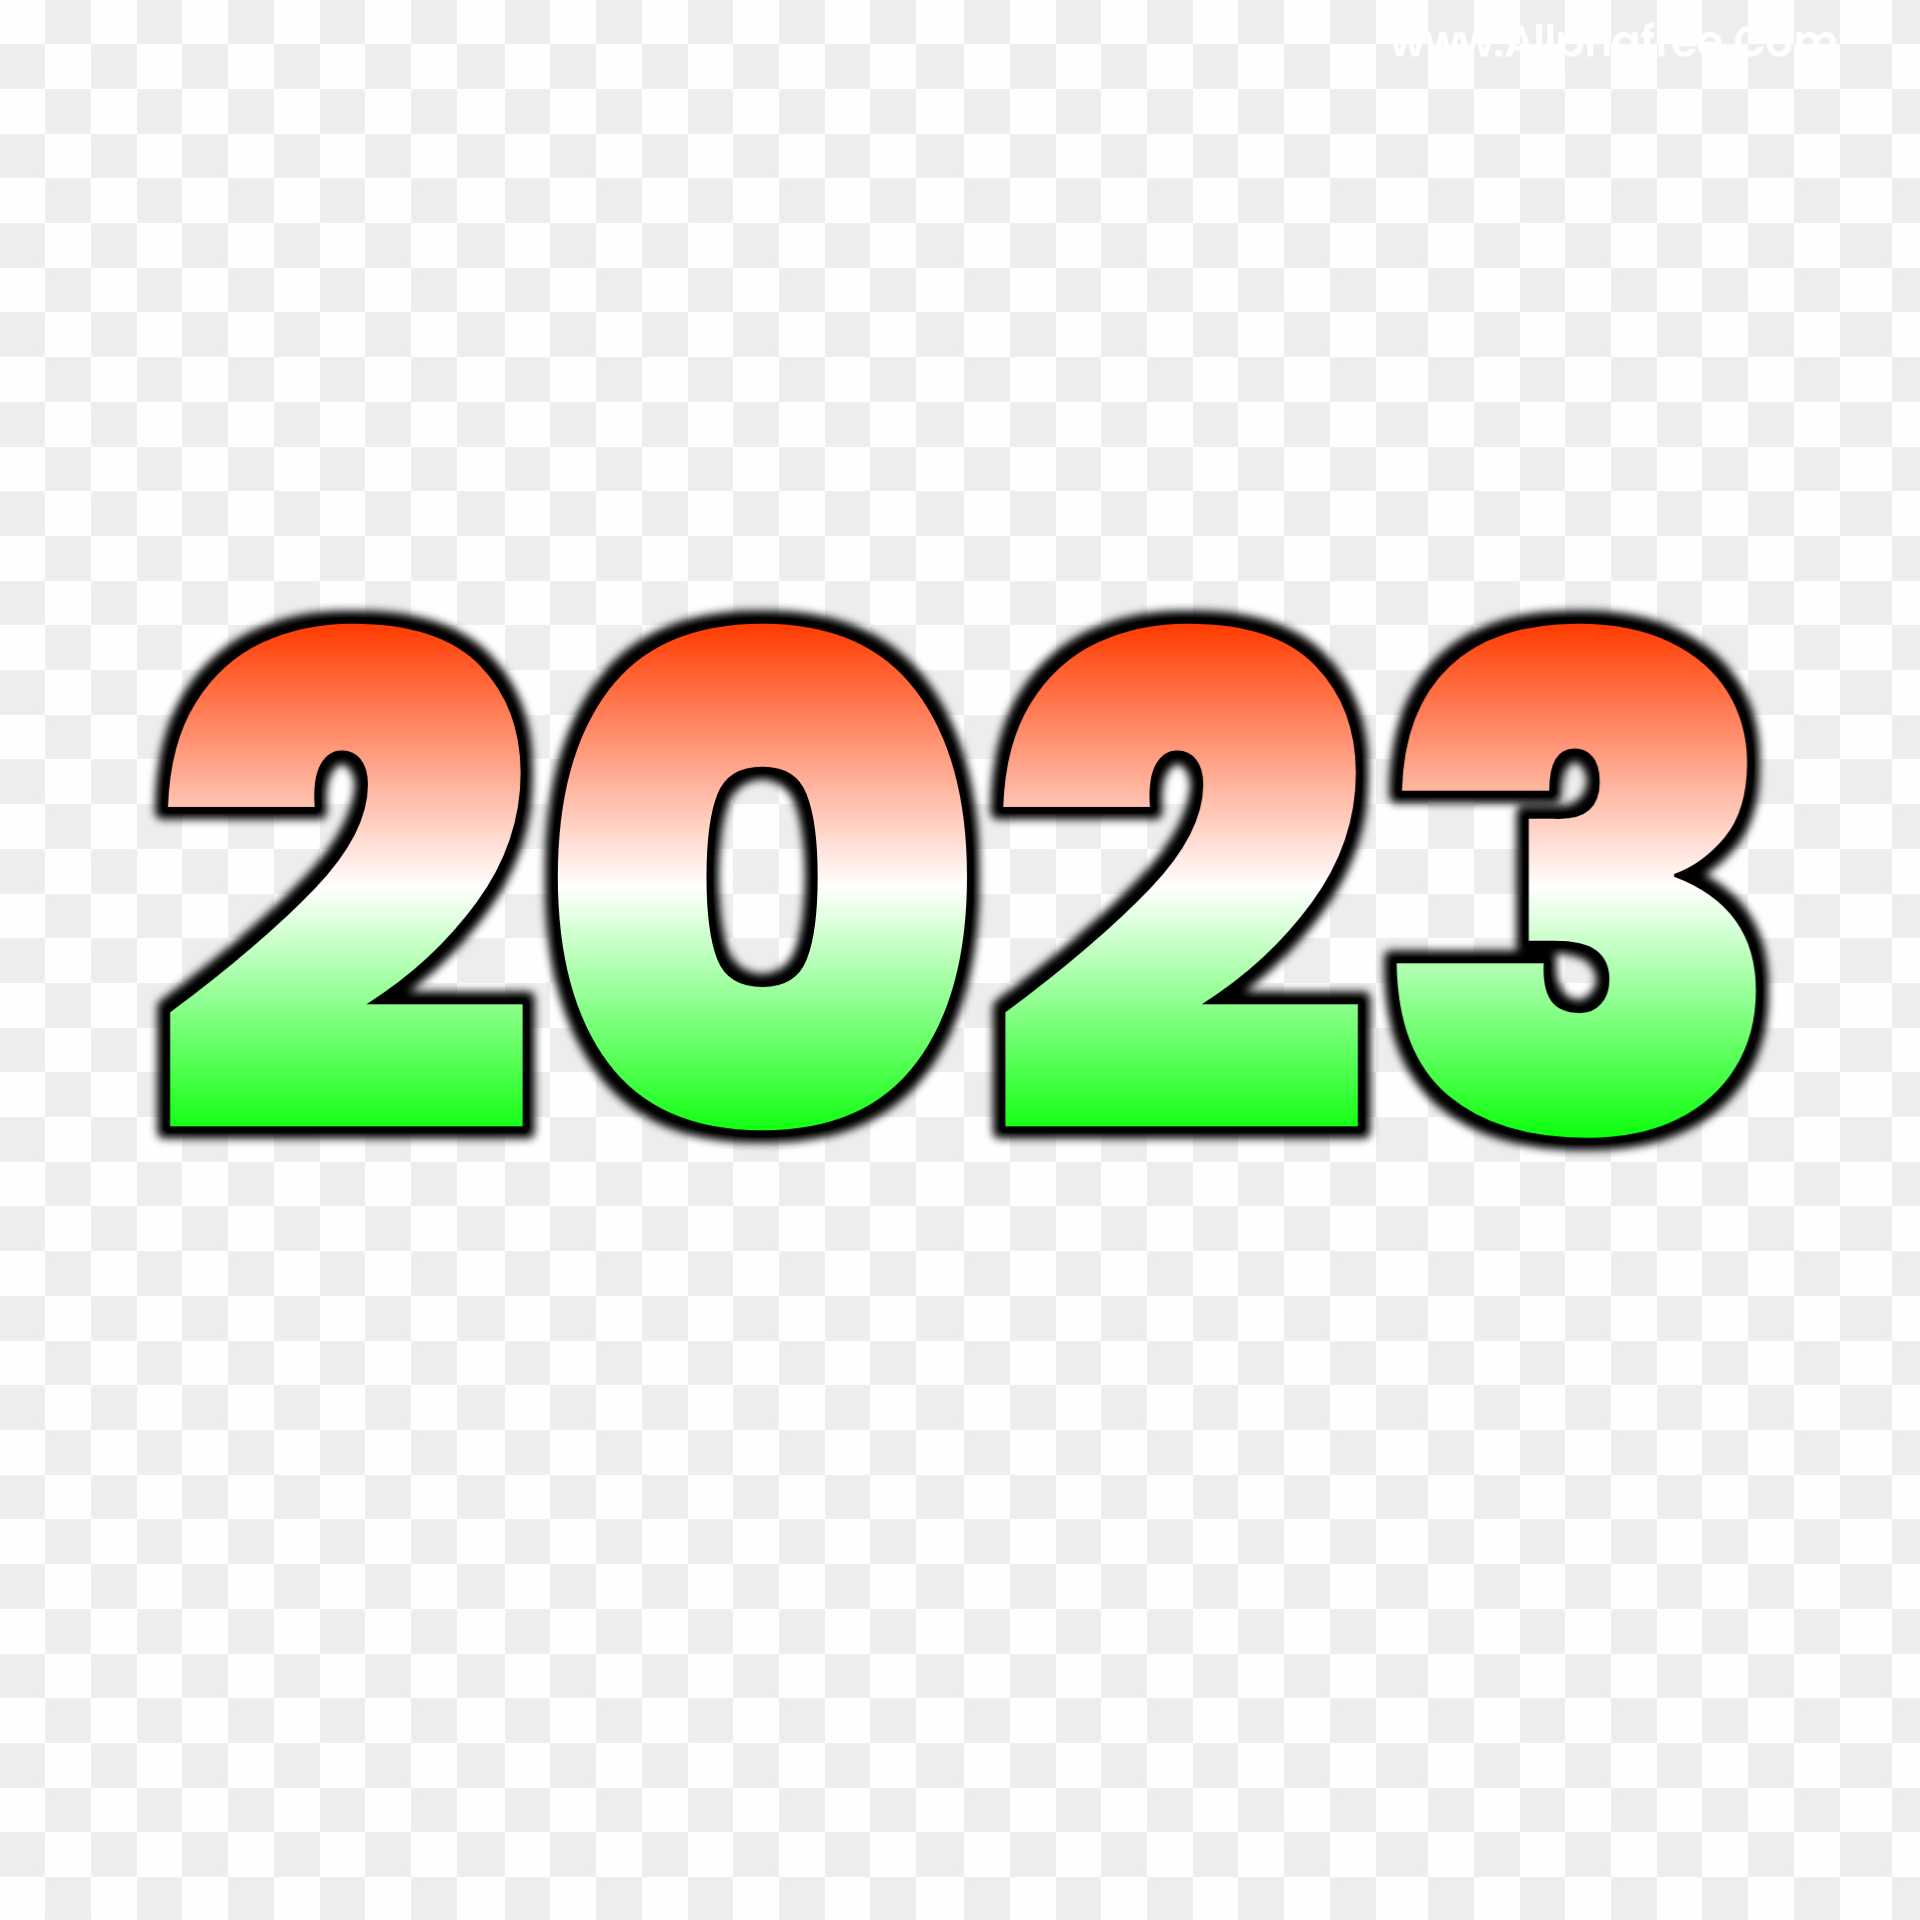 2023 tringa text PNG images 